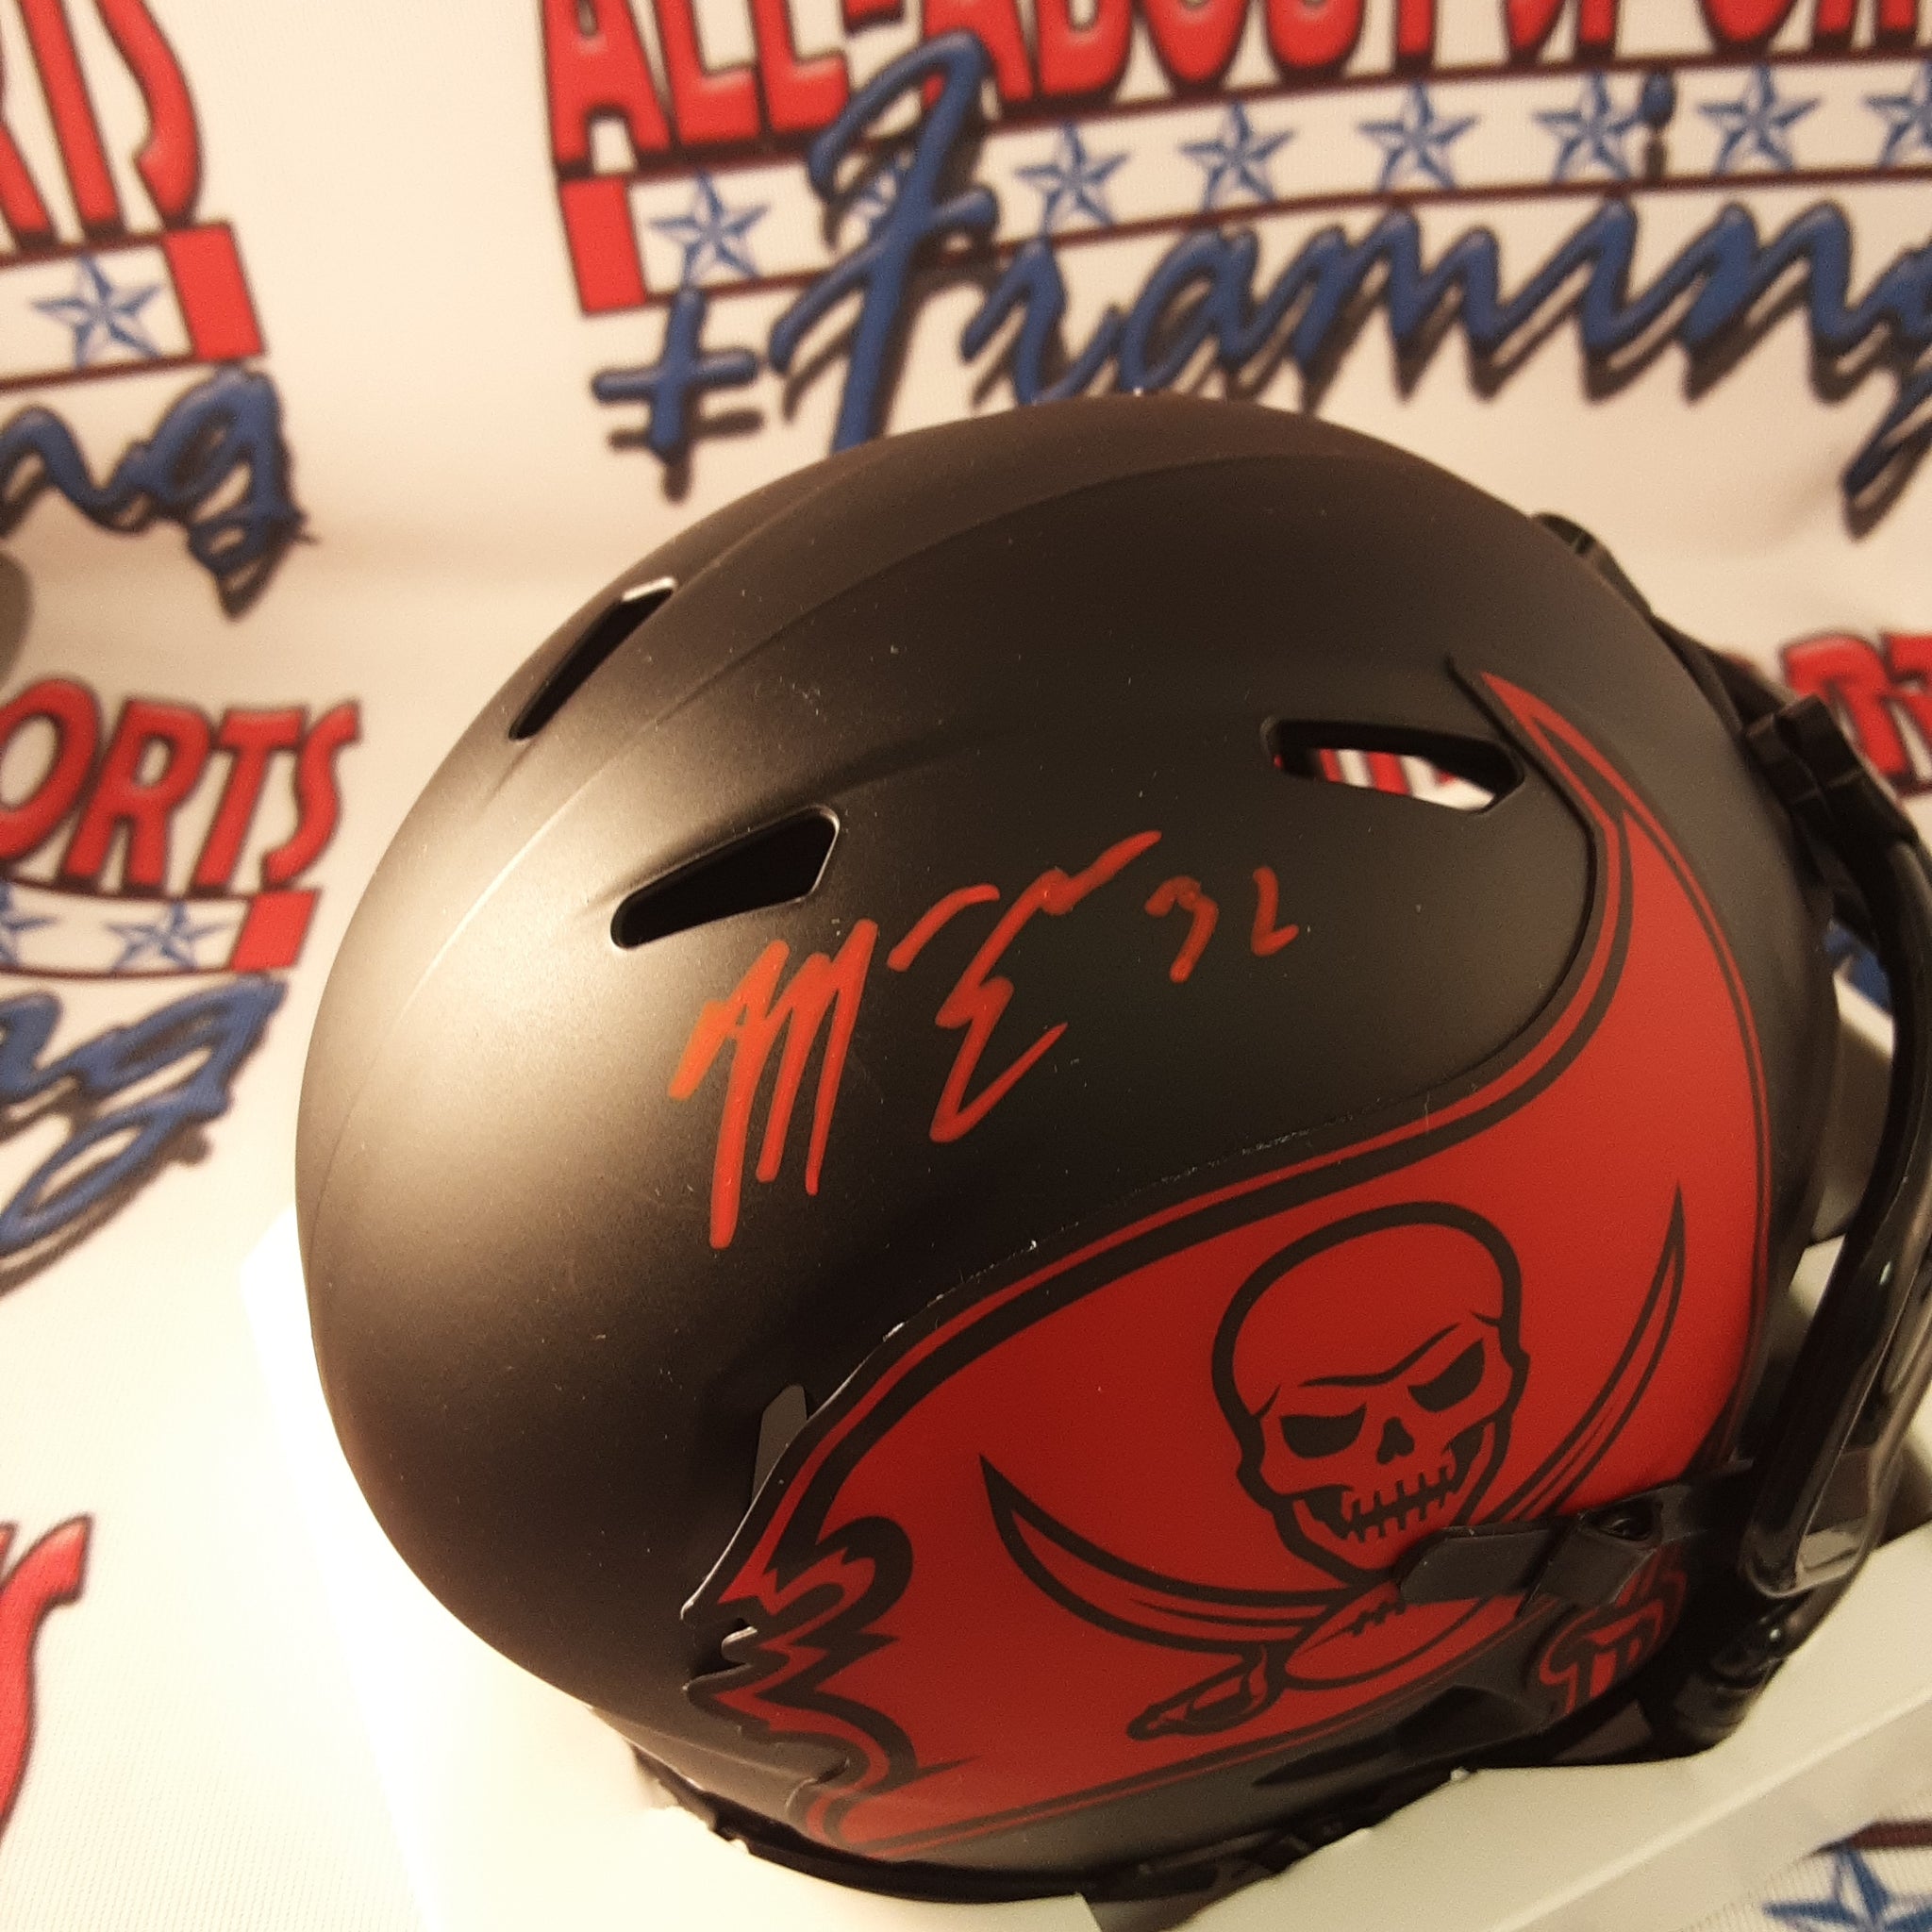 Mike Edwards Authentic Signed Autographed Mini Helmet JSA